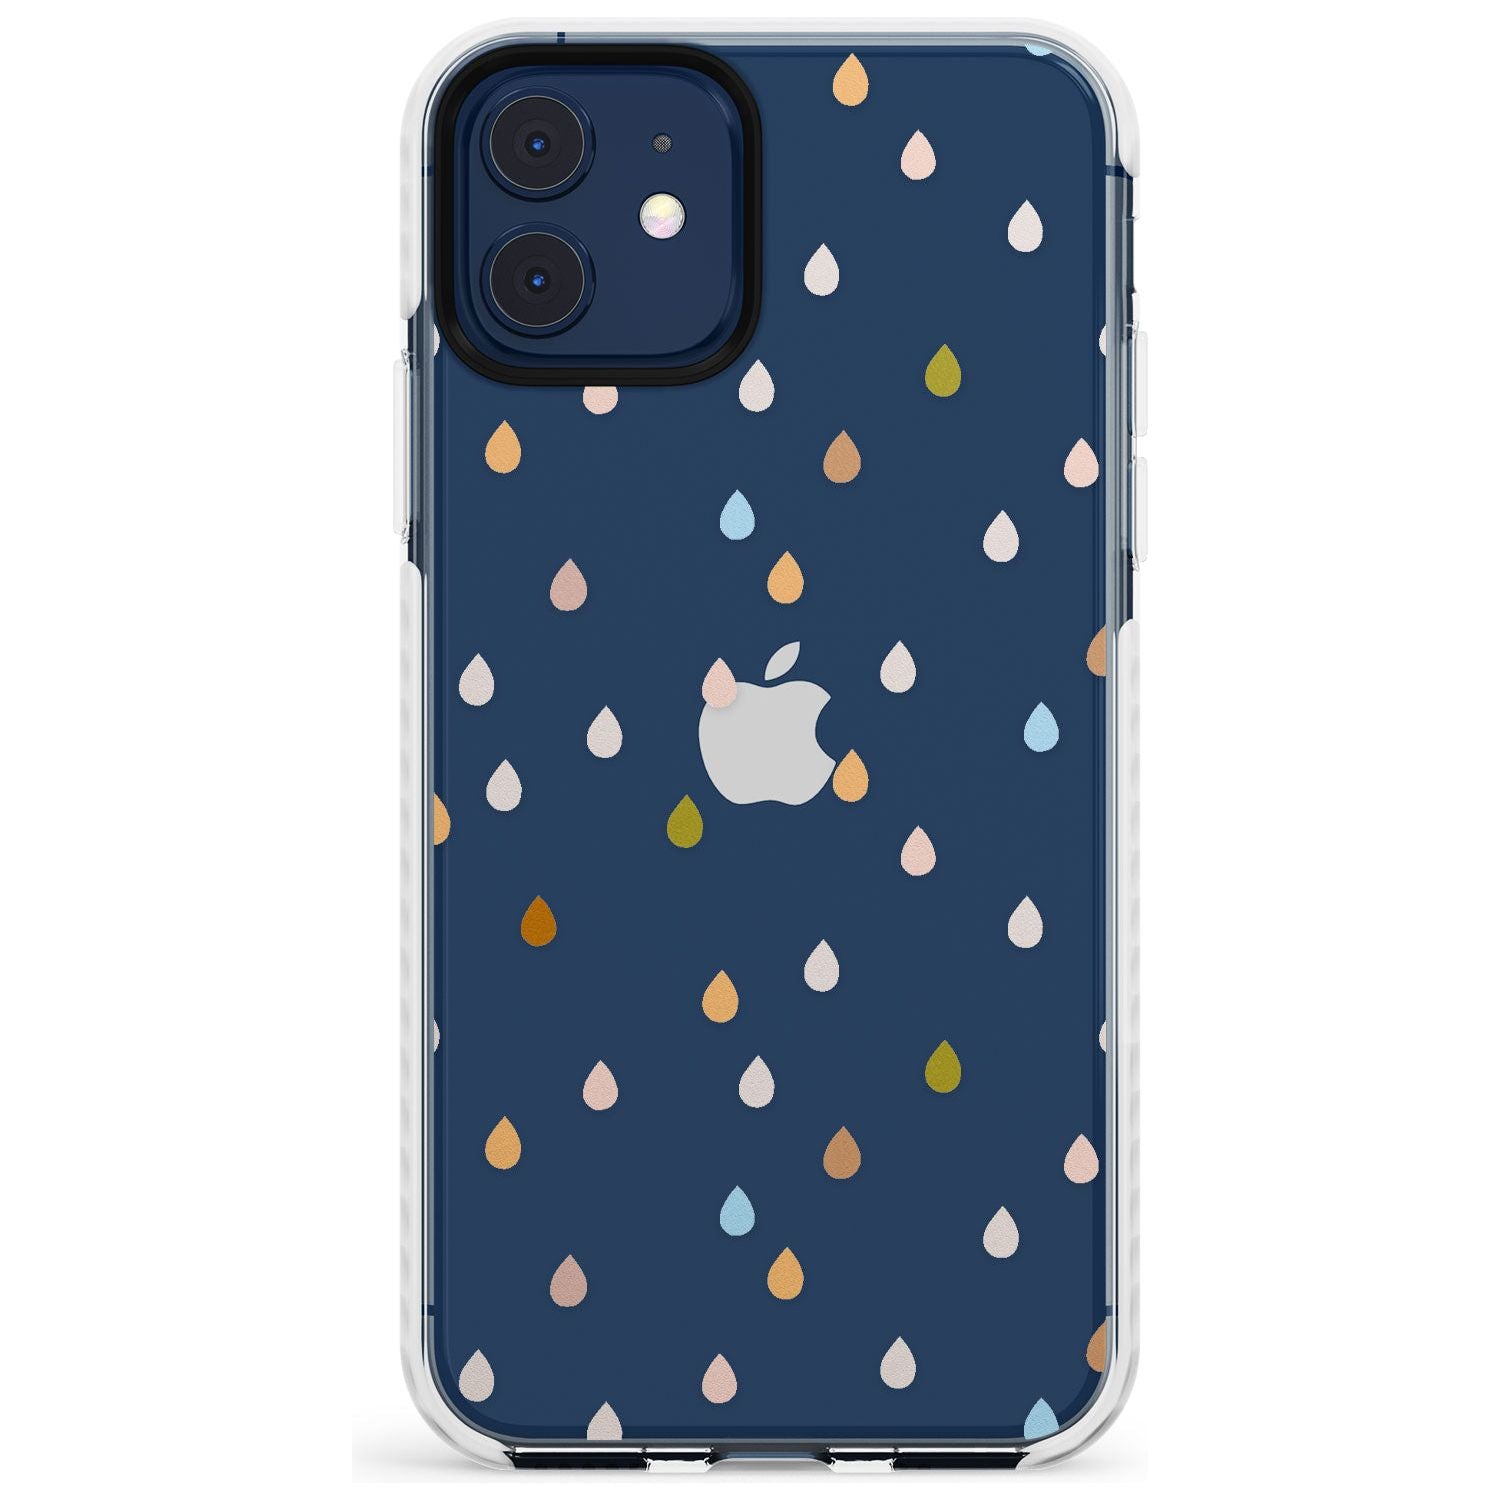 Raindrops Slim TPU Phone Case for iPhone 11